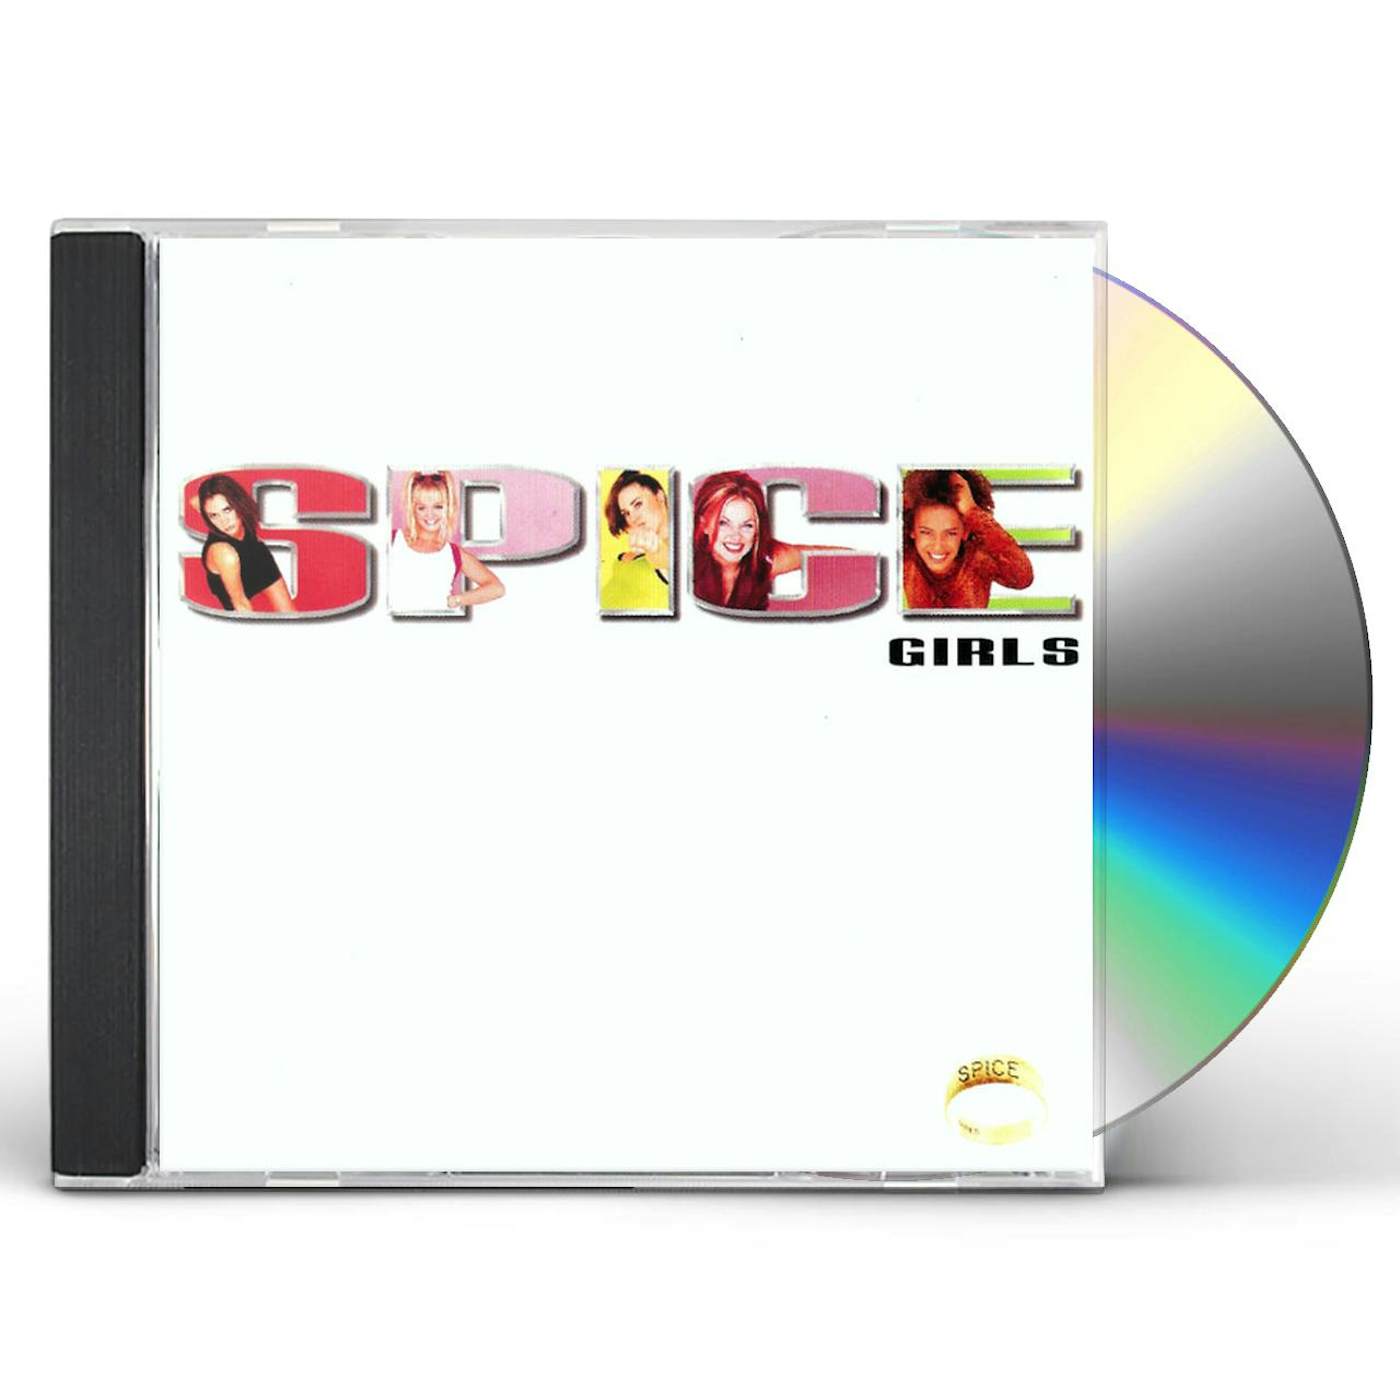 Spice Girls SPICE CD